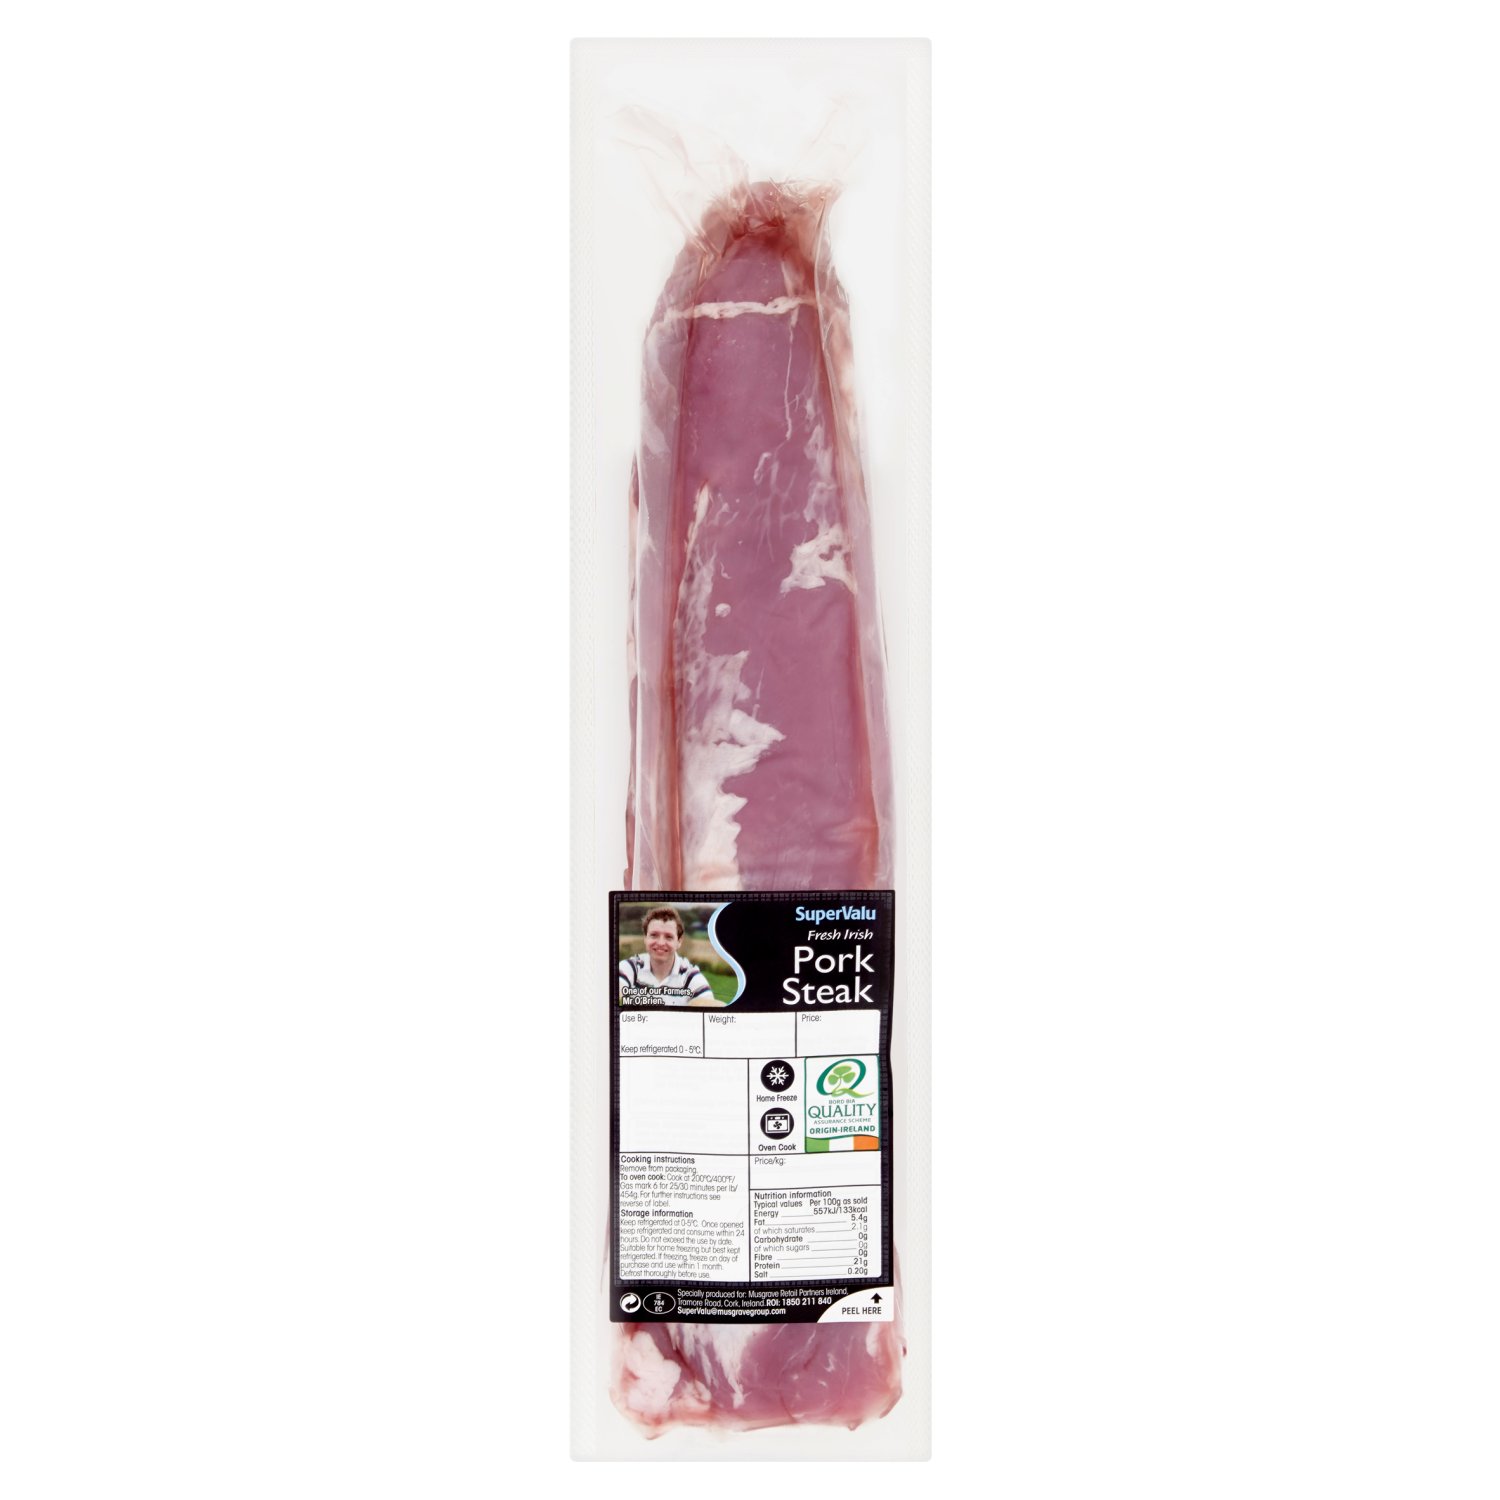 SuperValu Fresh Irish Pork Steak (1 kg)